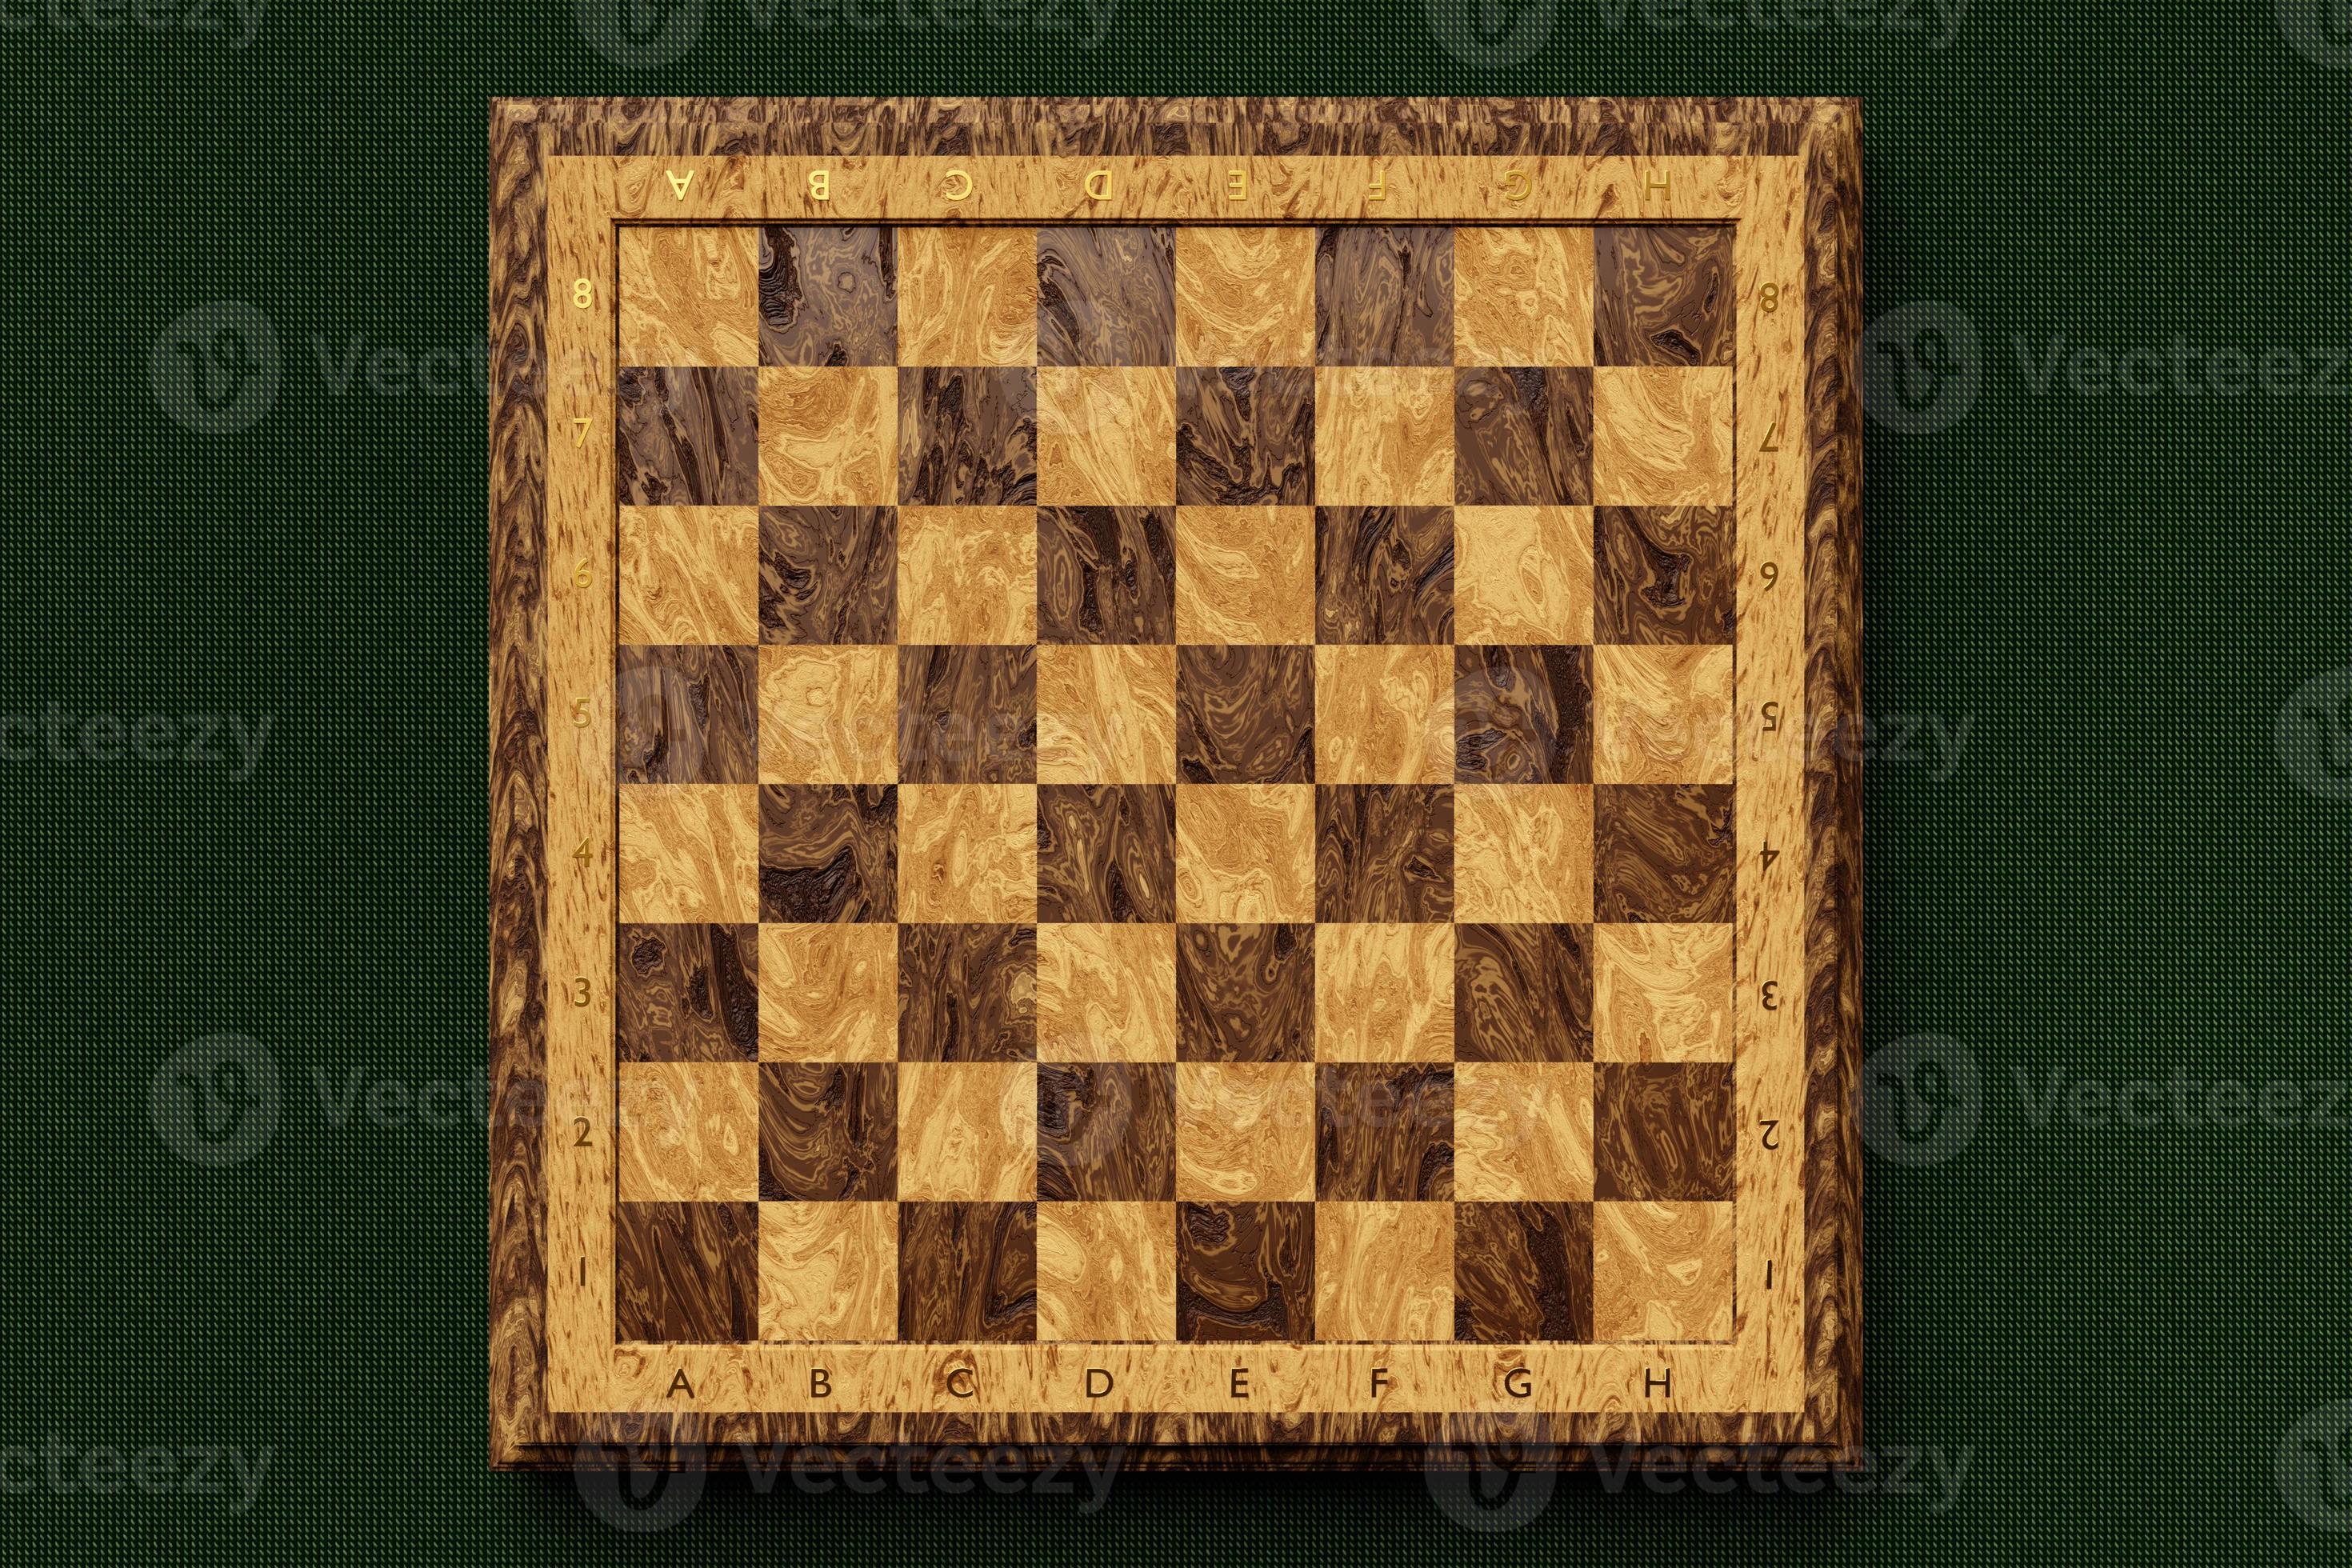 Ilustração 3d de xadrez online